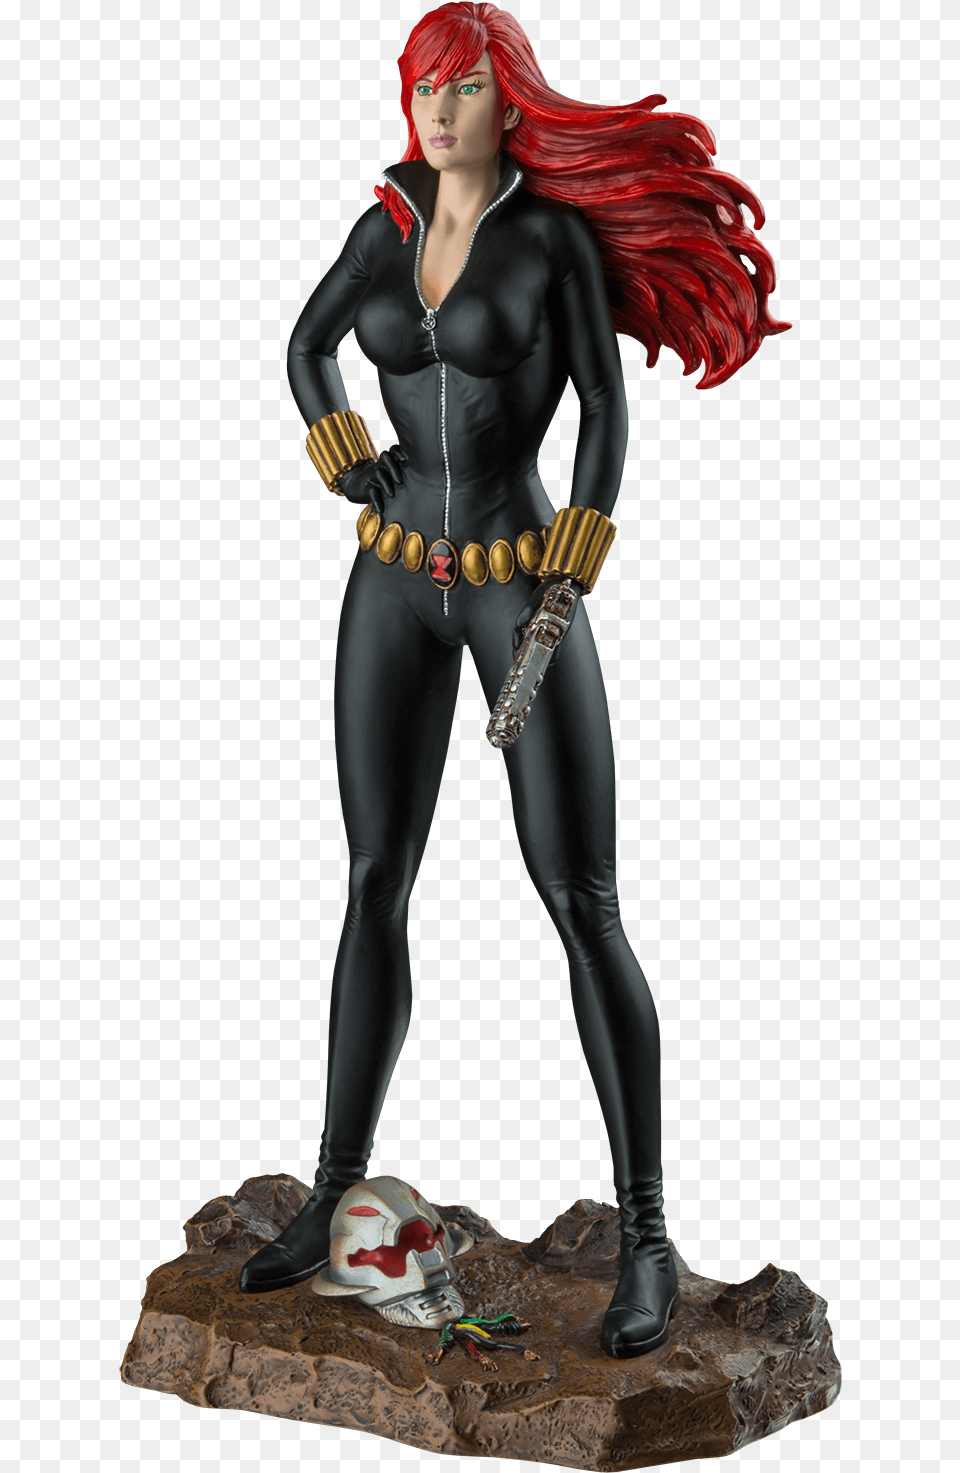 Neca 1 4 Black Widow, Figurine, Adult, Clothing, Costume Free Transparent Png